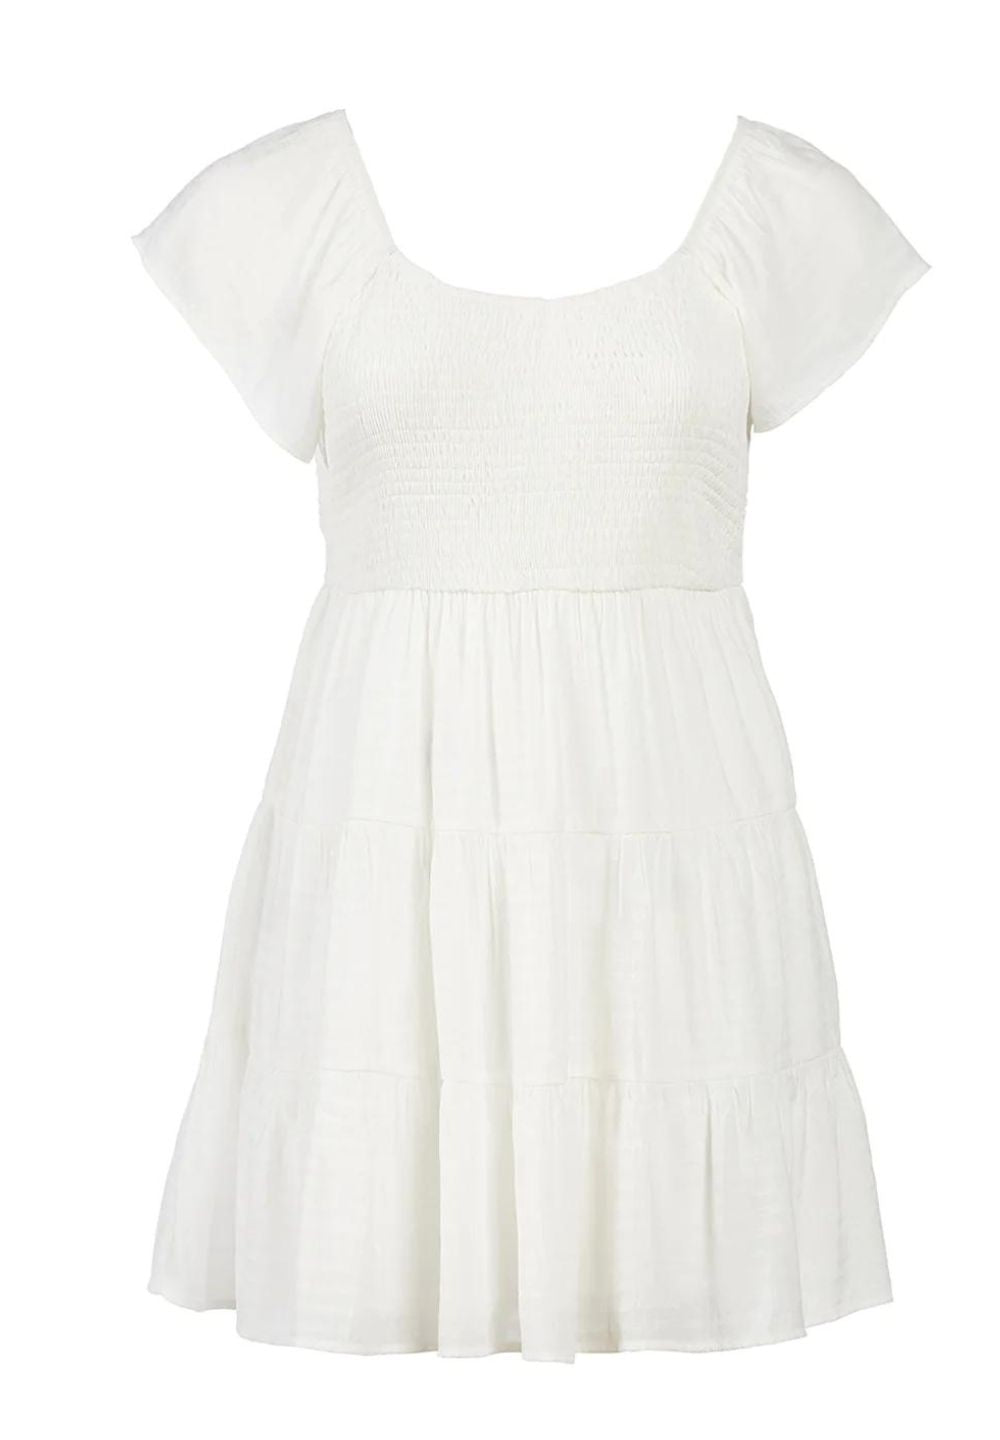 White Smocked Tiered Dress, Size 3X